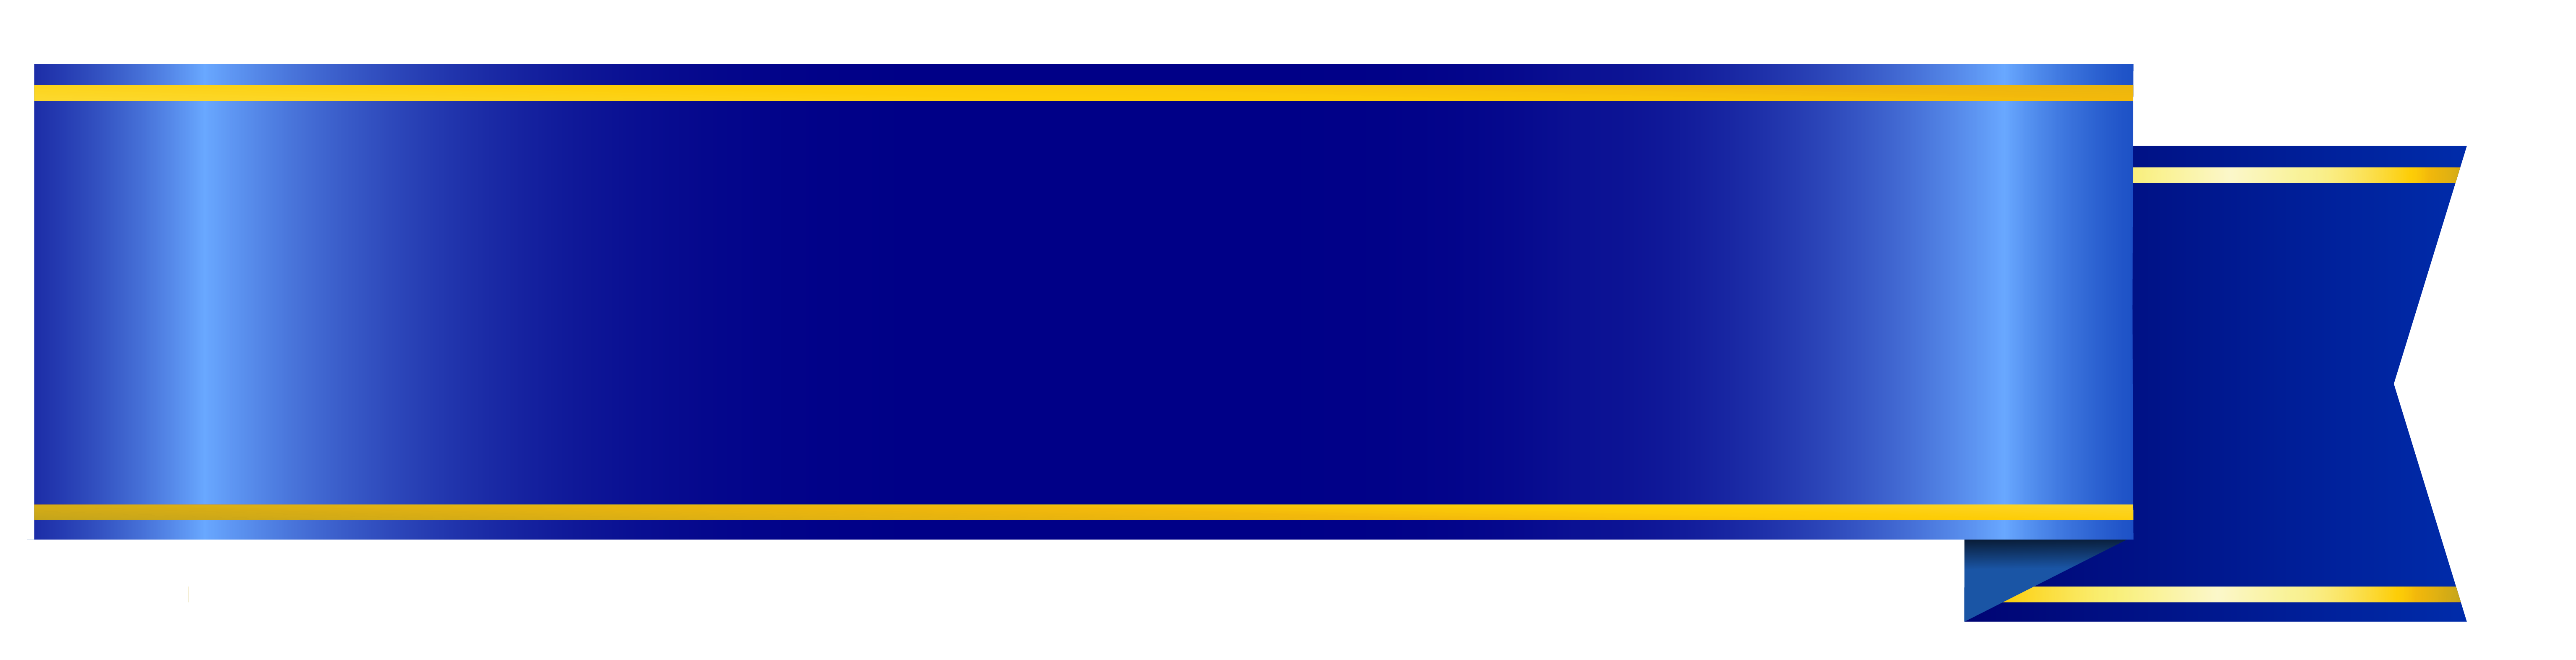 Blauwe banner PNG Beeld Transparant